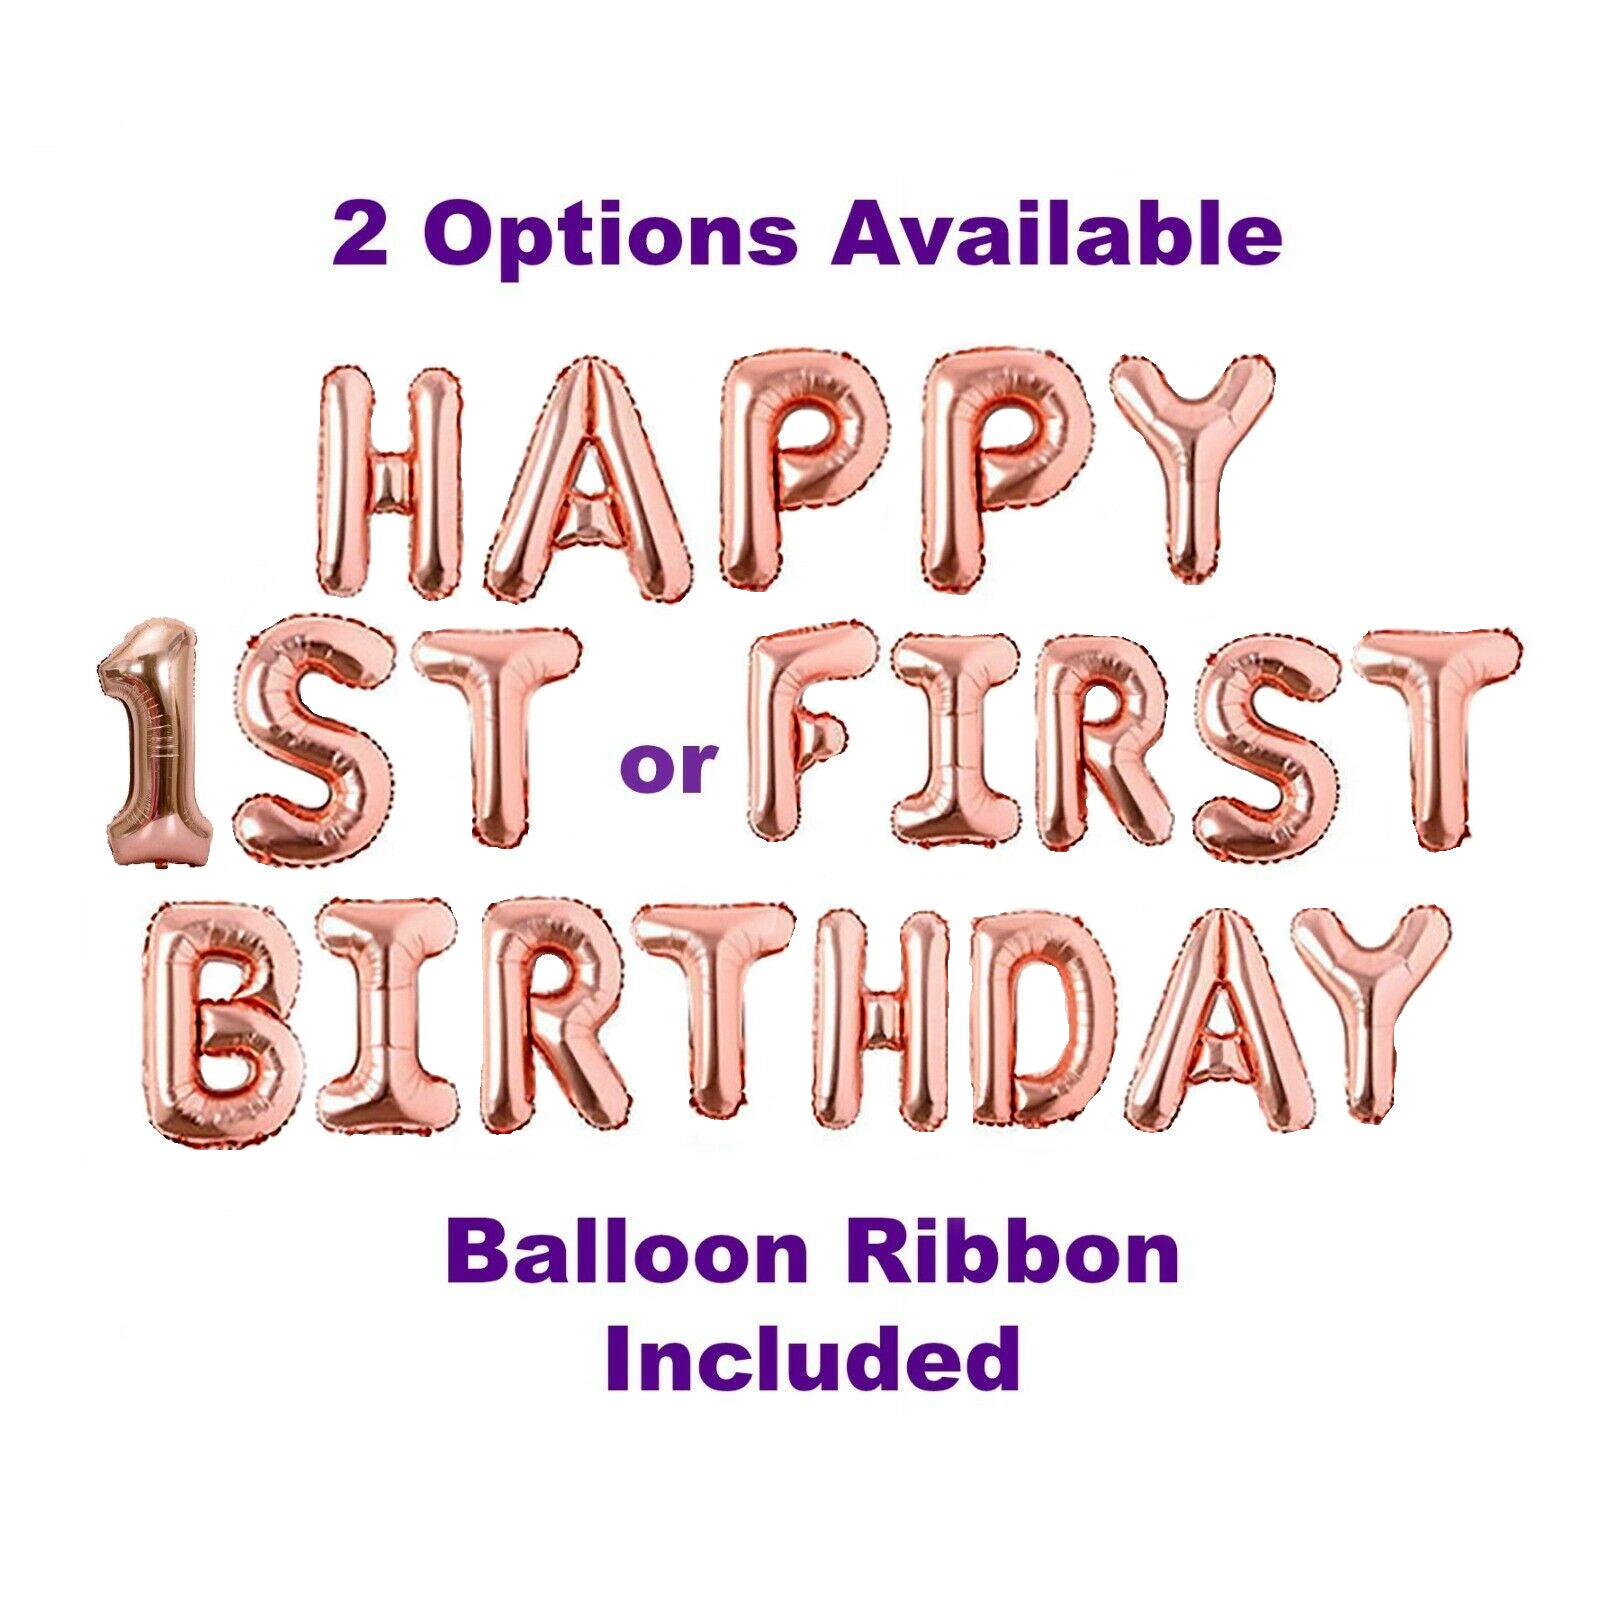 Happy First Birthday Balloons